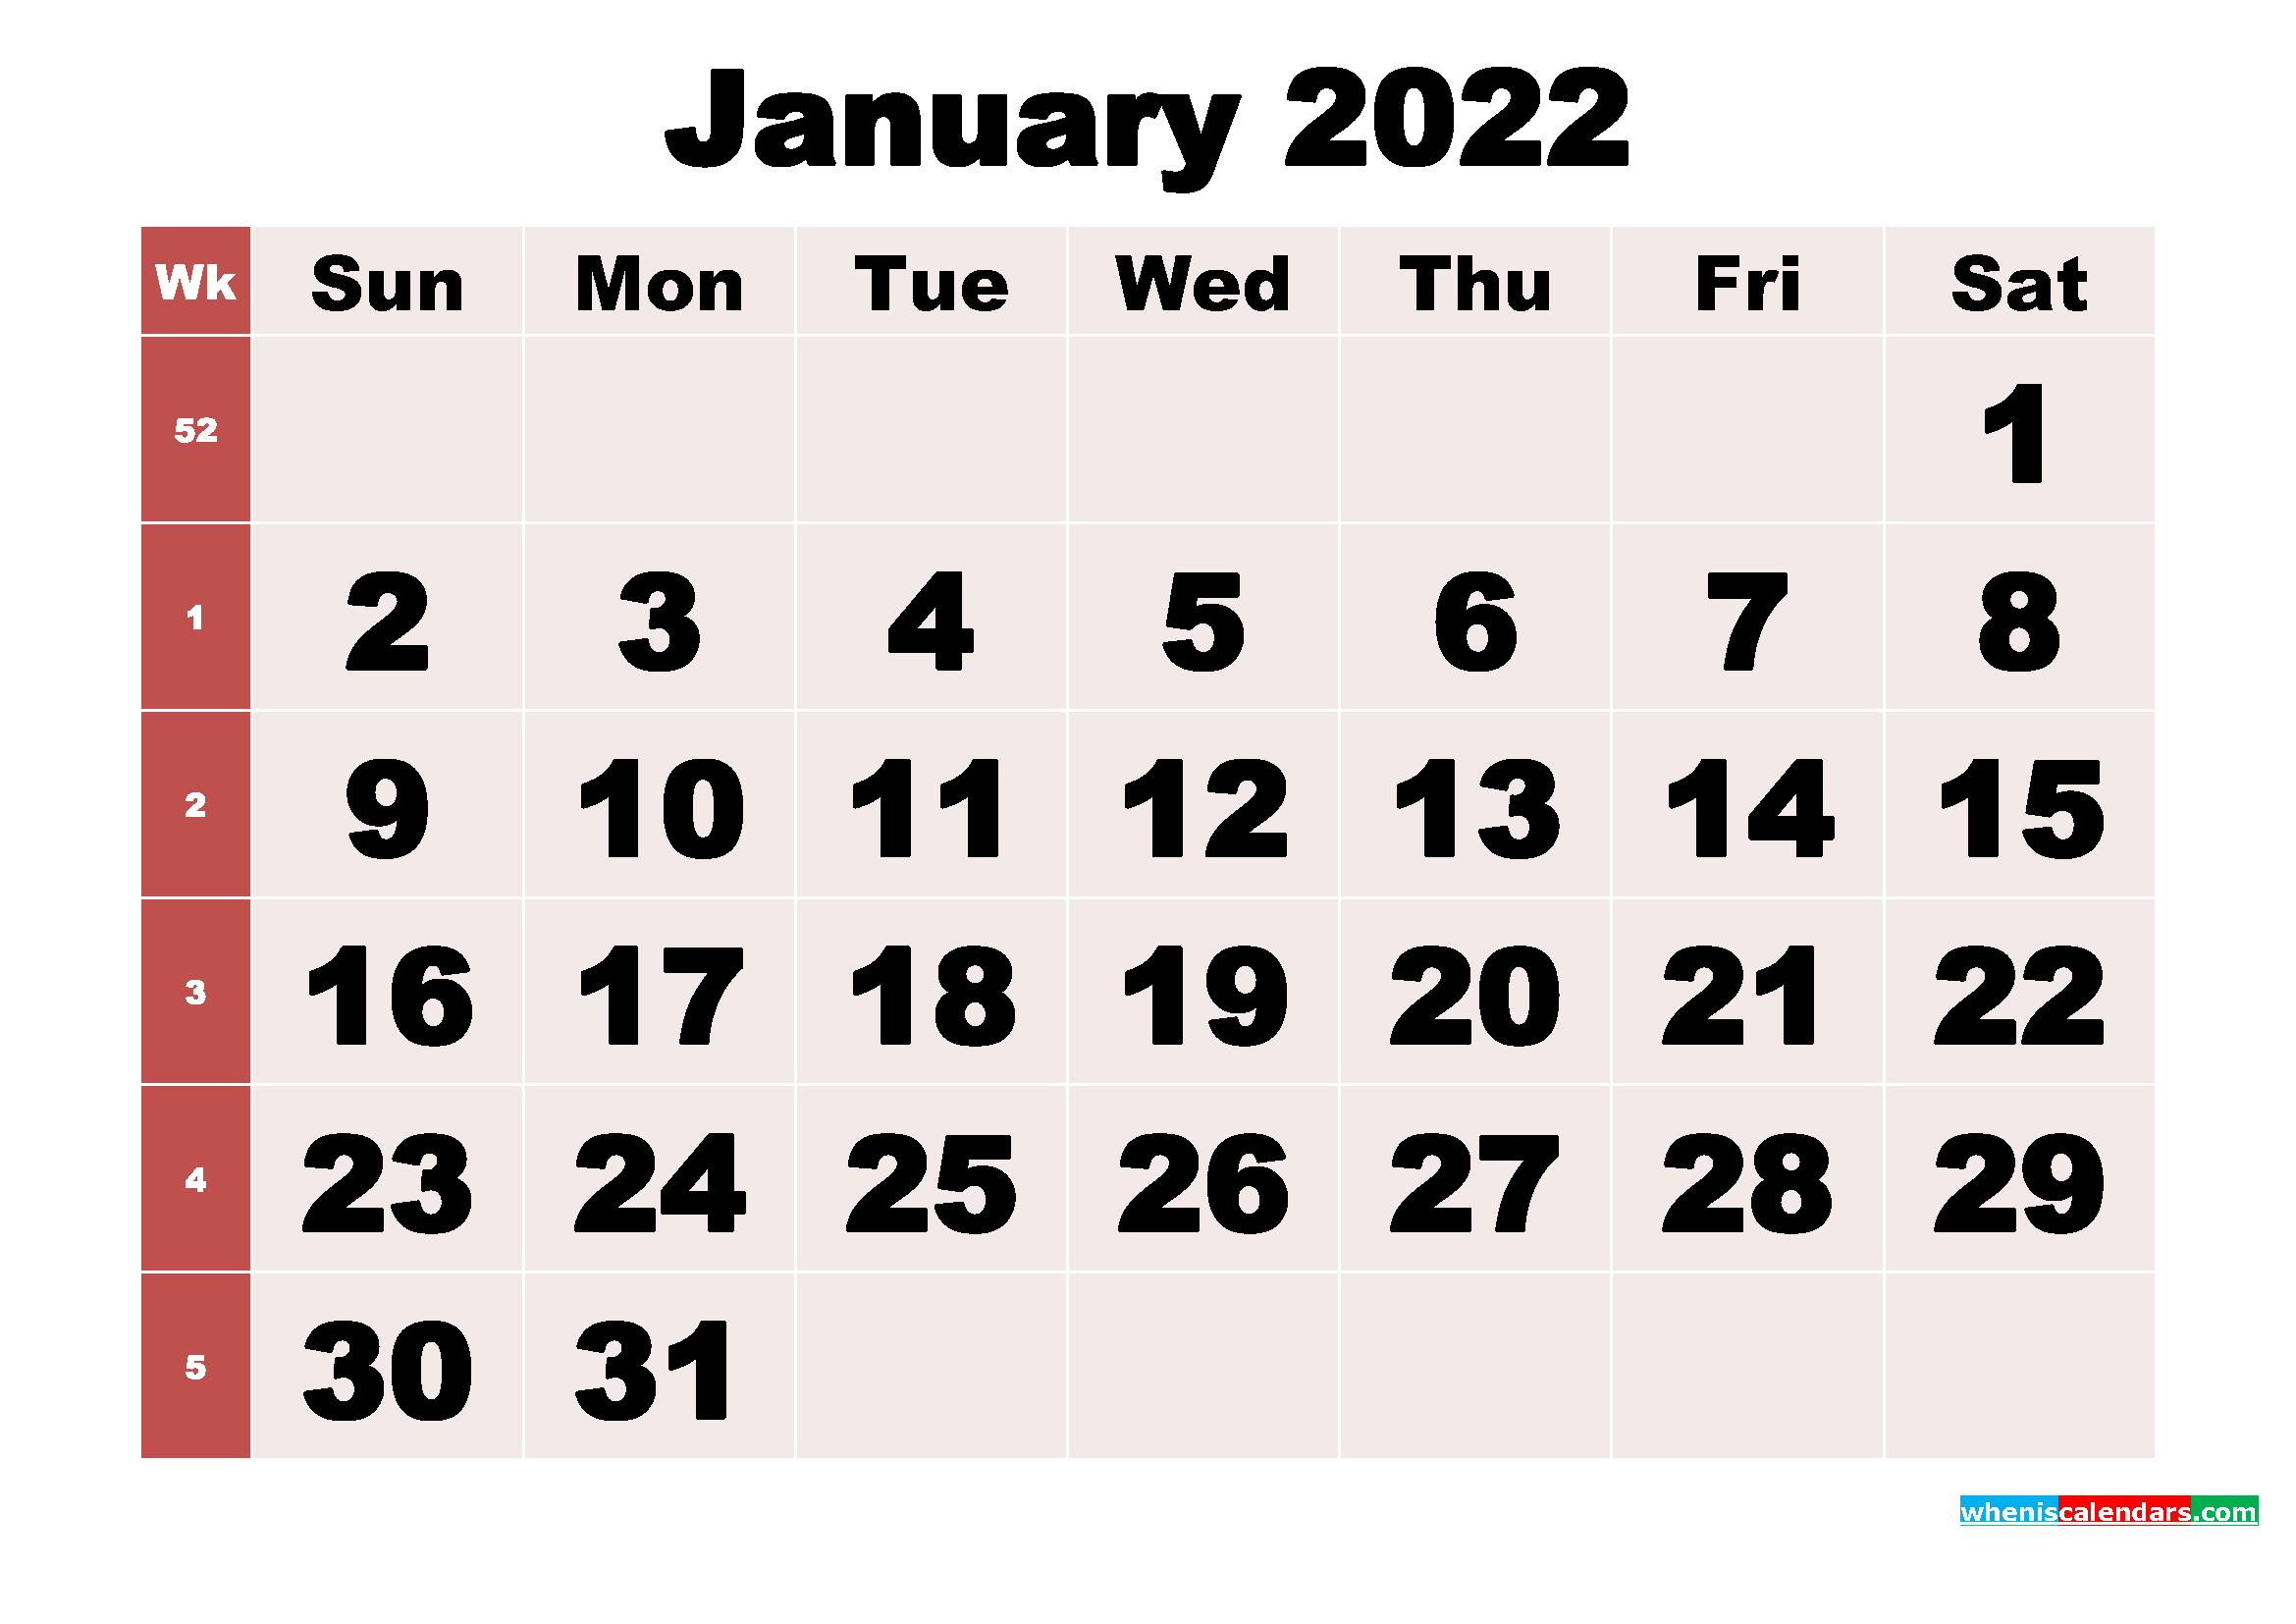 Free Printable Monthly Calendar January 2022